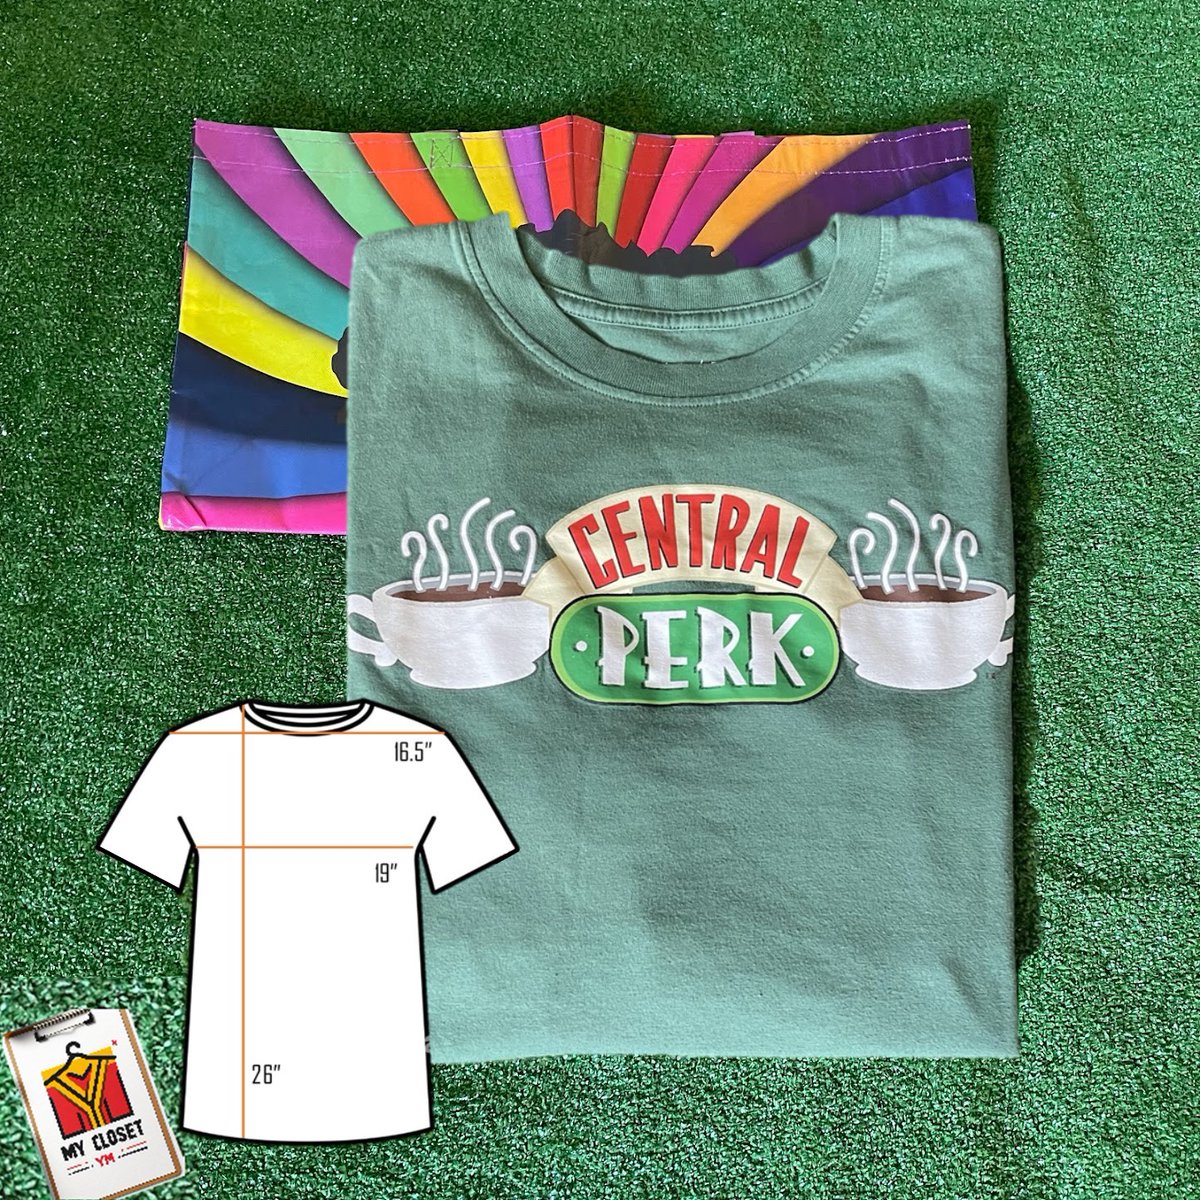 Friends Iconic Central Perk Coffee Long Sleeve Crewneck Green T-Shirt Size S

#FriendsFashion
#CentralPerkCoffee
#LongSleeveTee
#CrewneckStyle
#GreenTShirt
#IconicDesign
#SizeSFashion
#TVShowMerchandise
#FanFavorite
#NostalgicFashion
ebay.com/itm/1264694092…